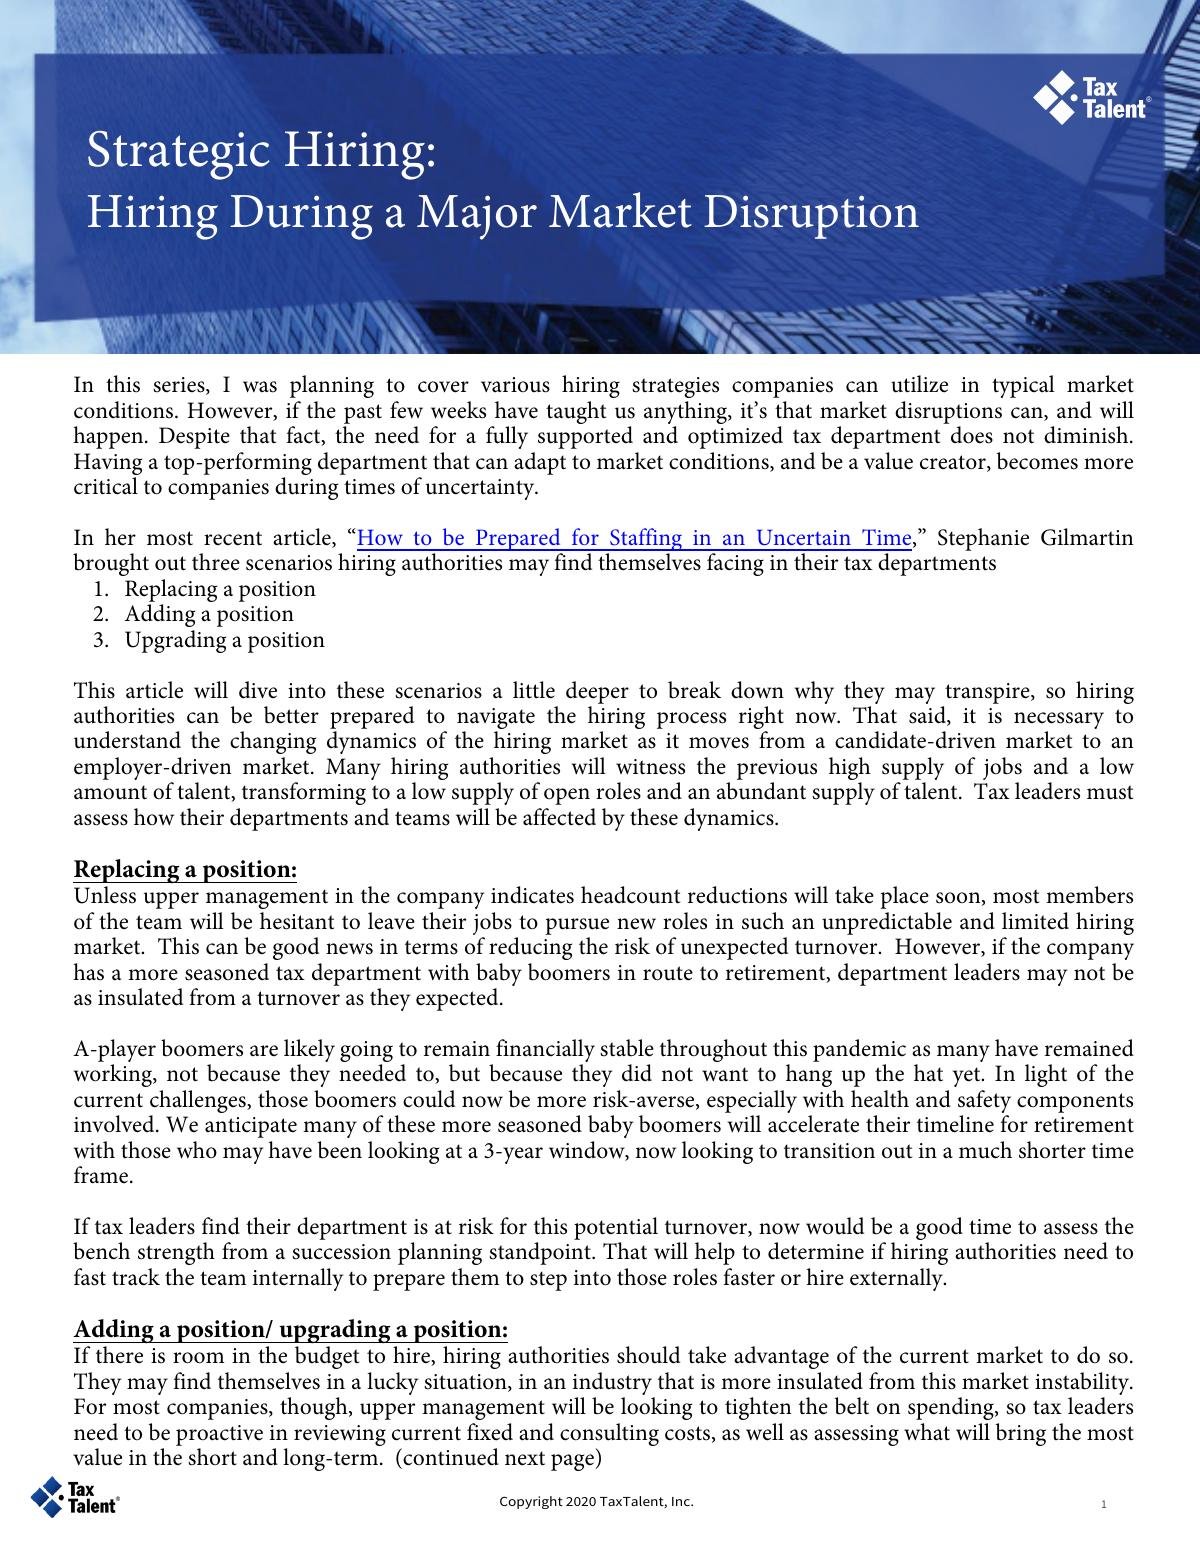 Strategic Hiring: Hiring During a Major Market Disruption